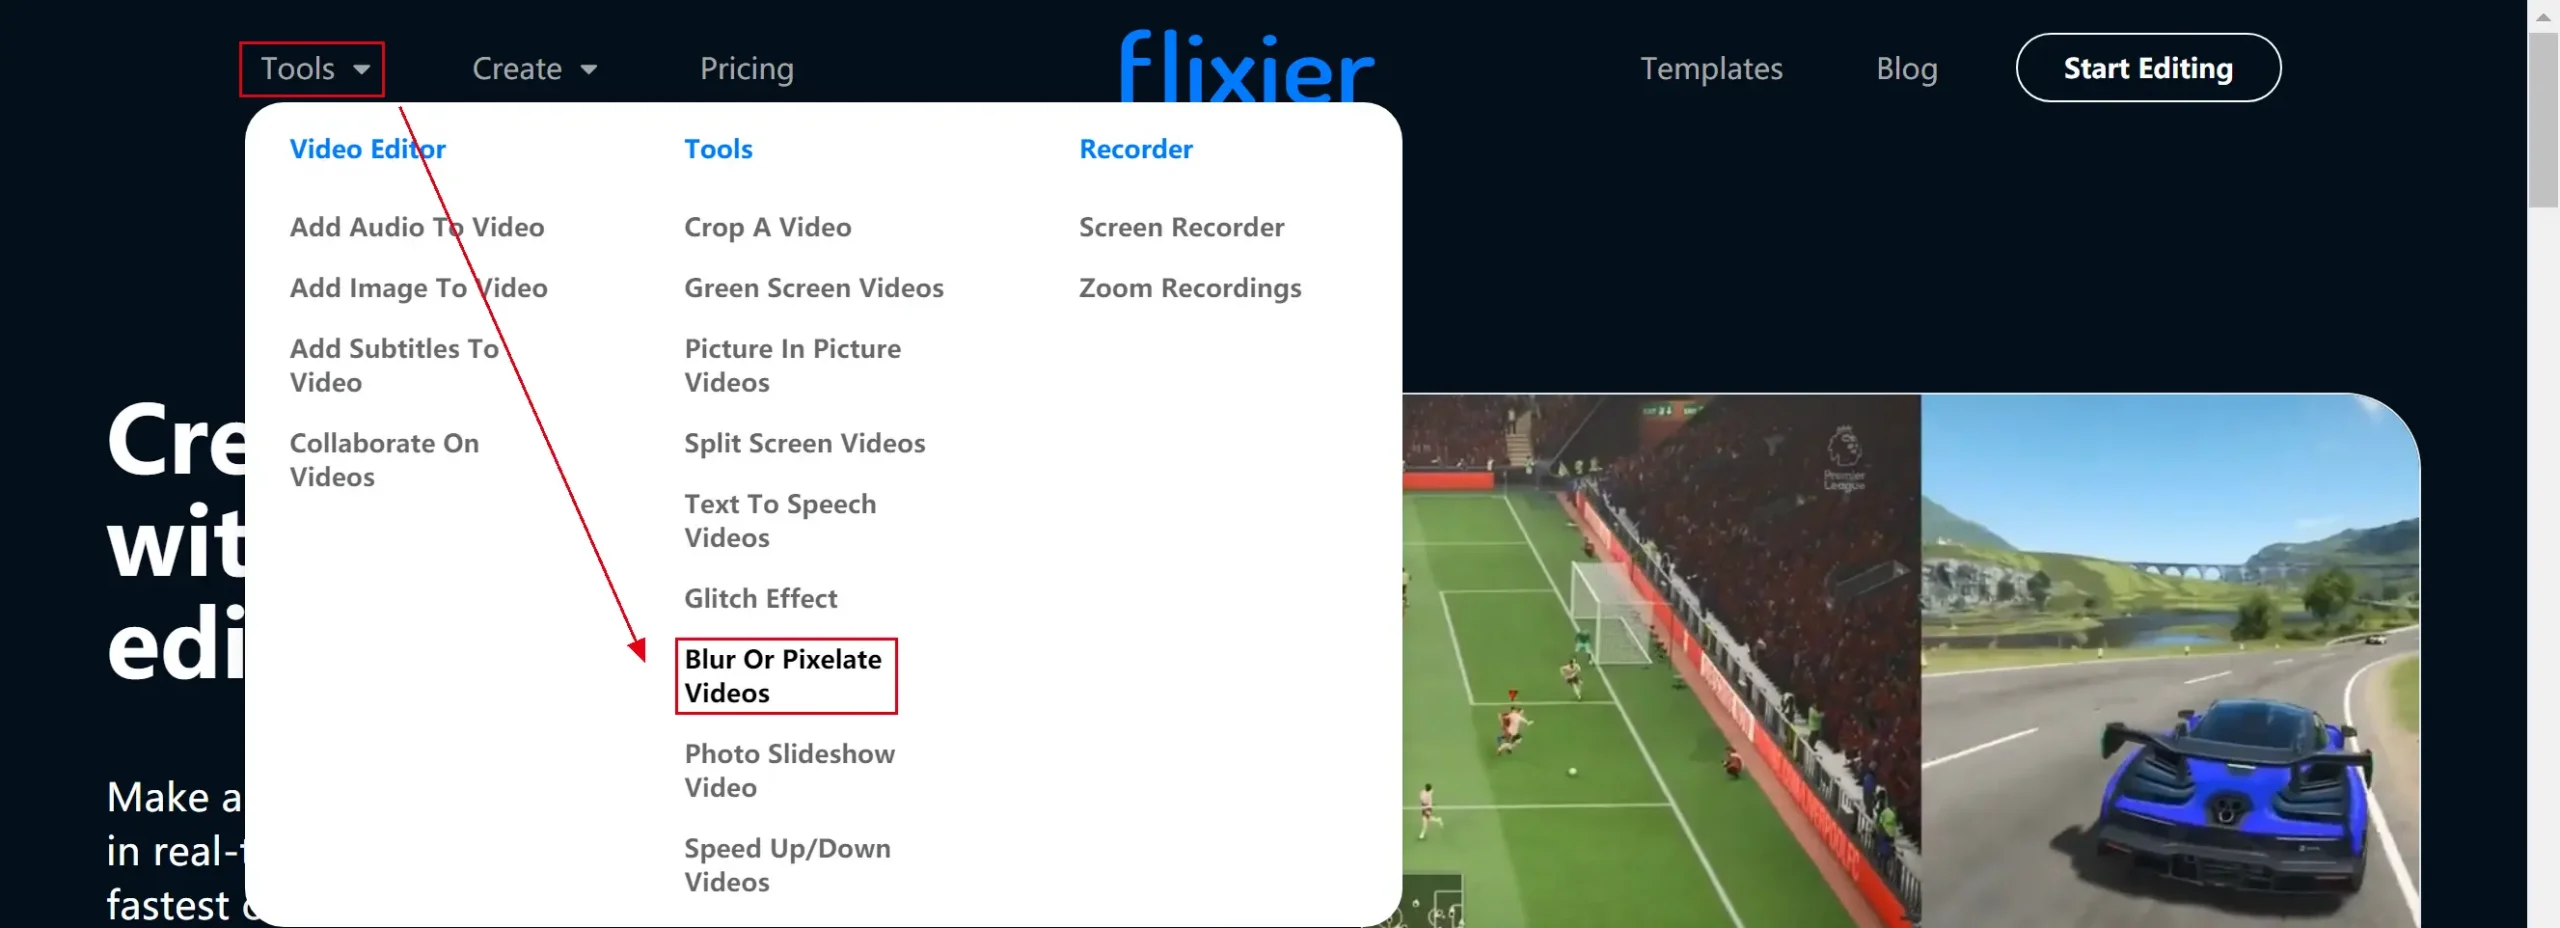 choose blur or pixelate videos in flixier 